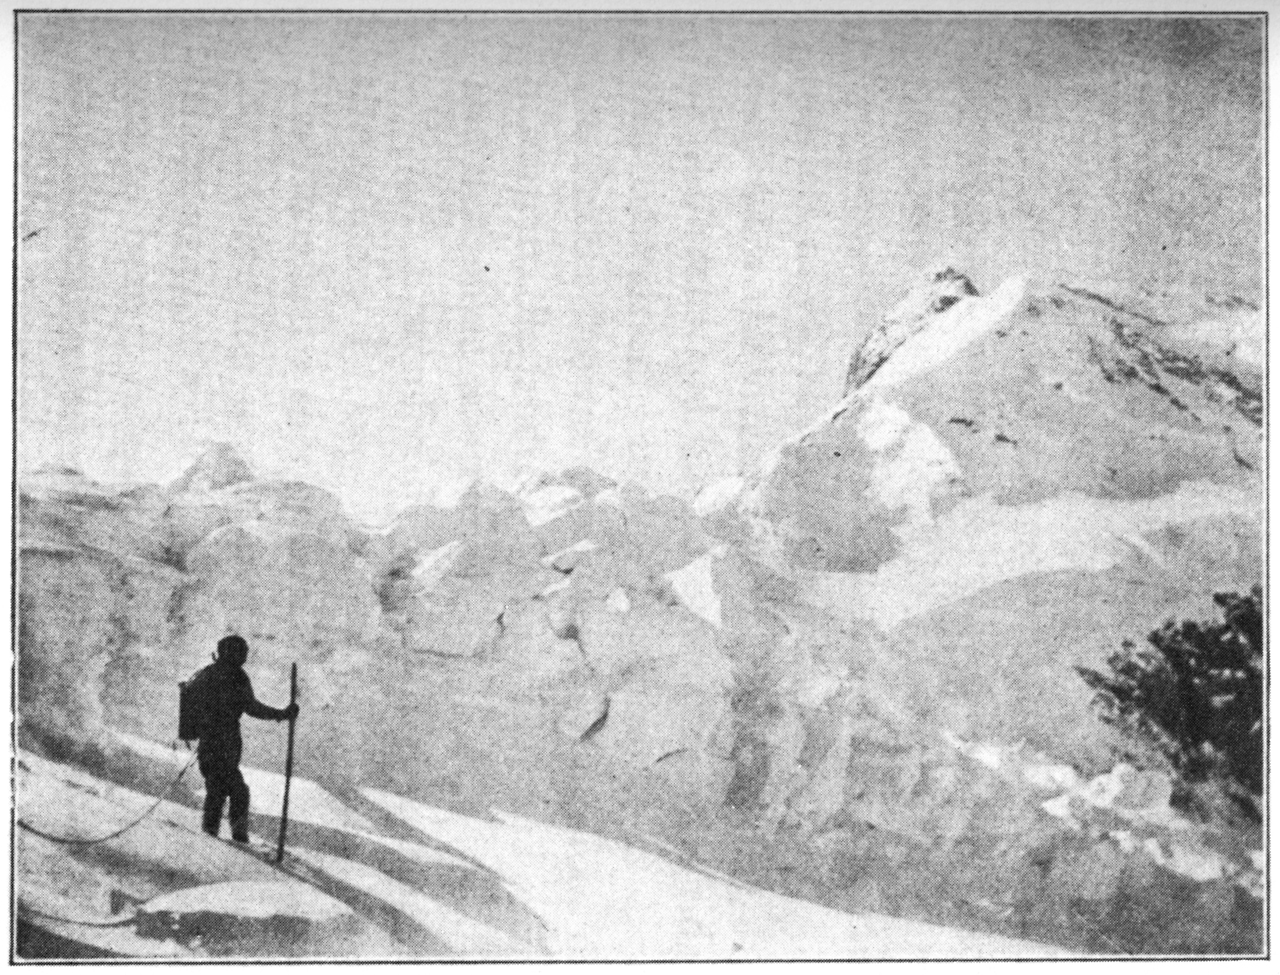 Mt. McKinley Initial Ascent